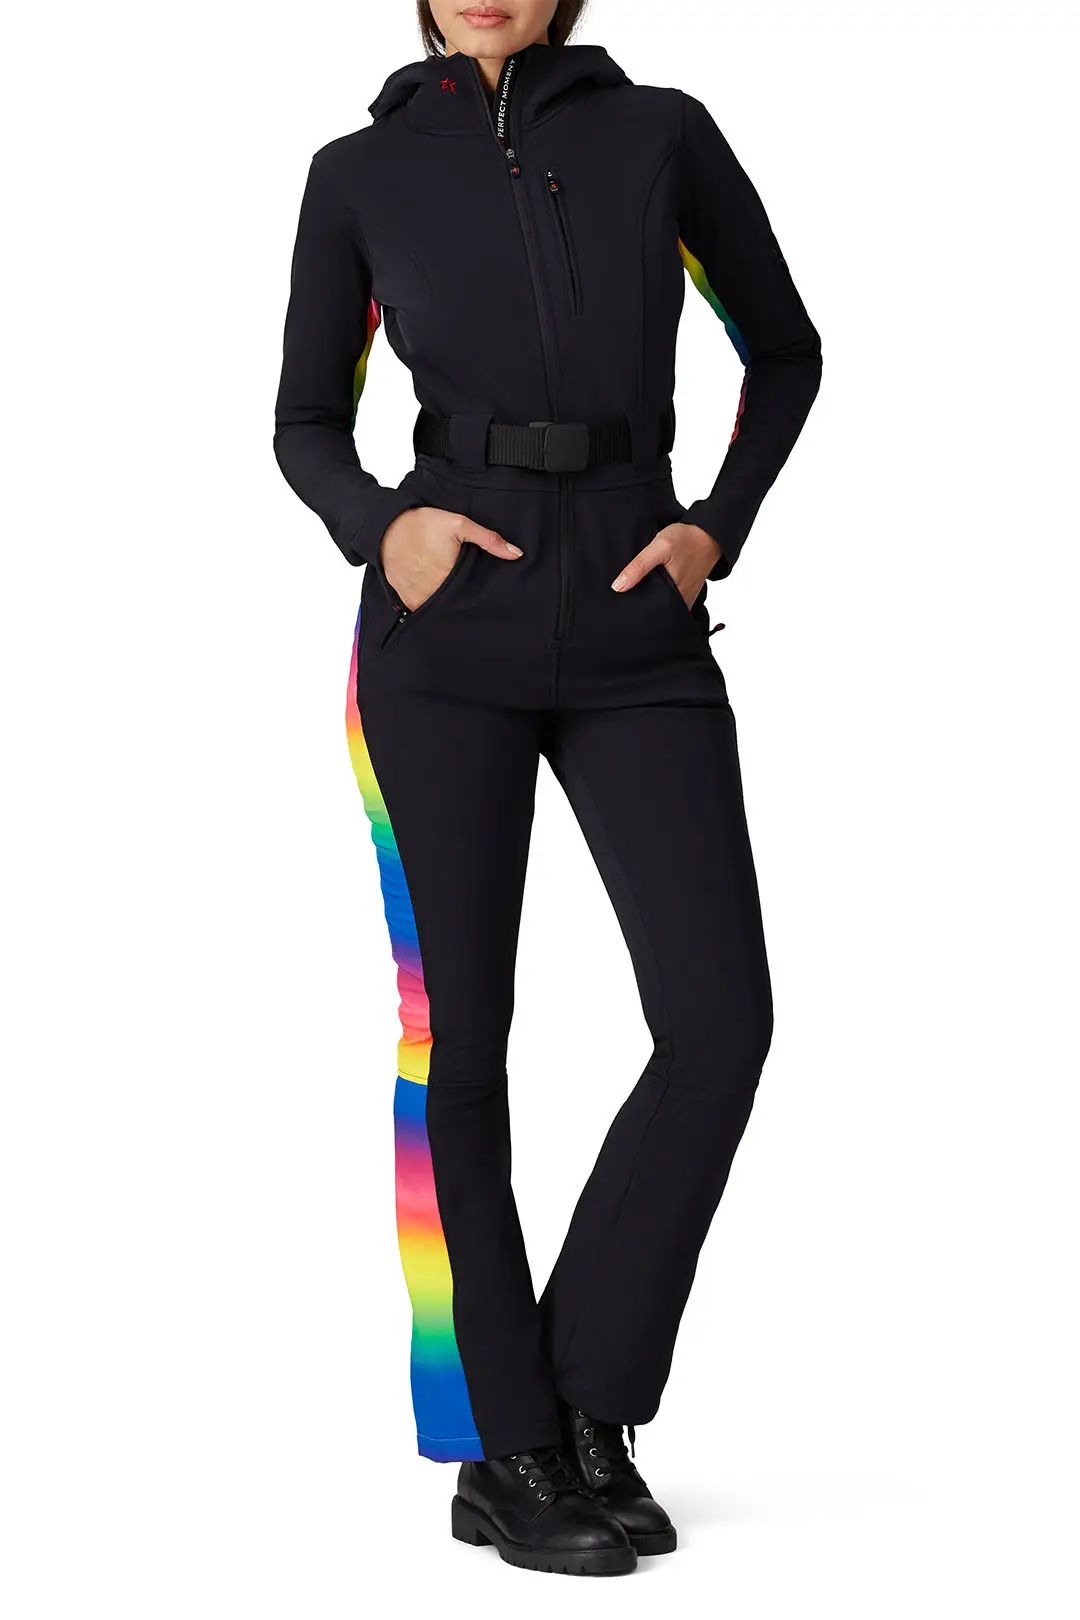 Perfect Moment Black Rainbow Ski Suit | Rent The Runway